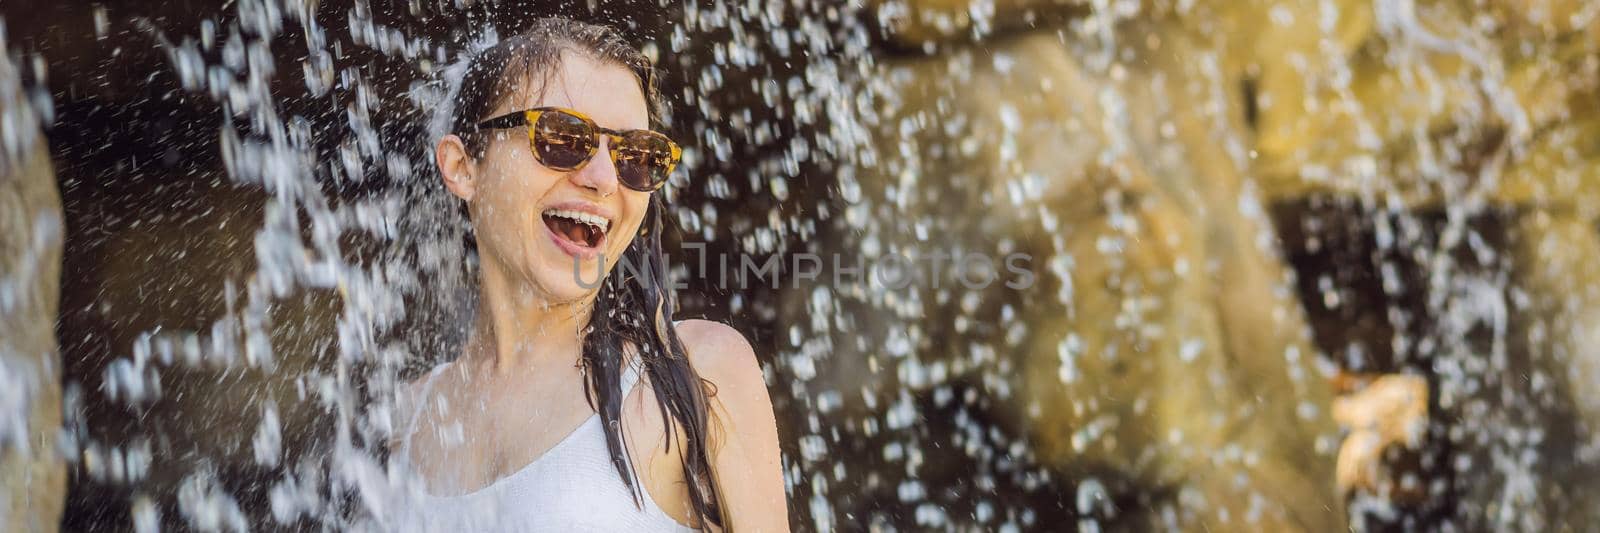 Young joyful woman under the water stream, pool, day spa, hot springs BANNER, LONG FORMAT by galitskaya